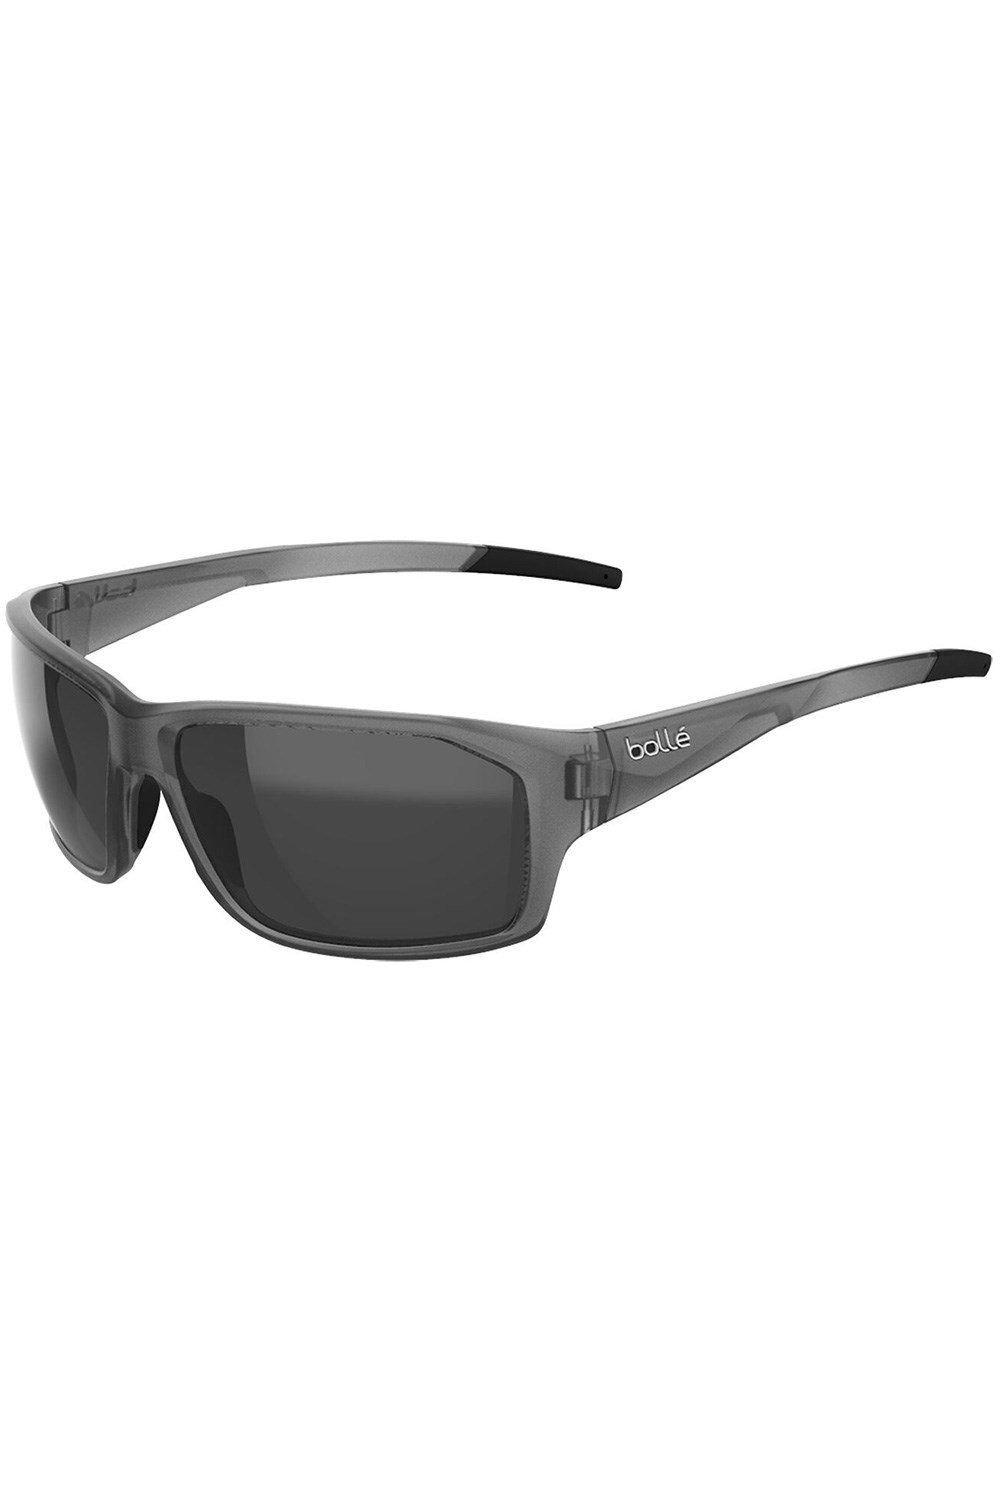 Fenix Unisex Sunglasses -